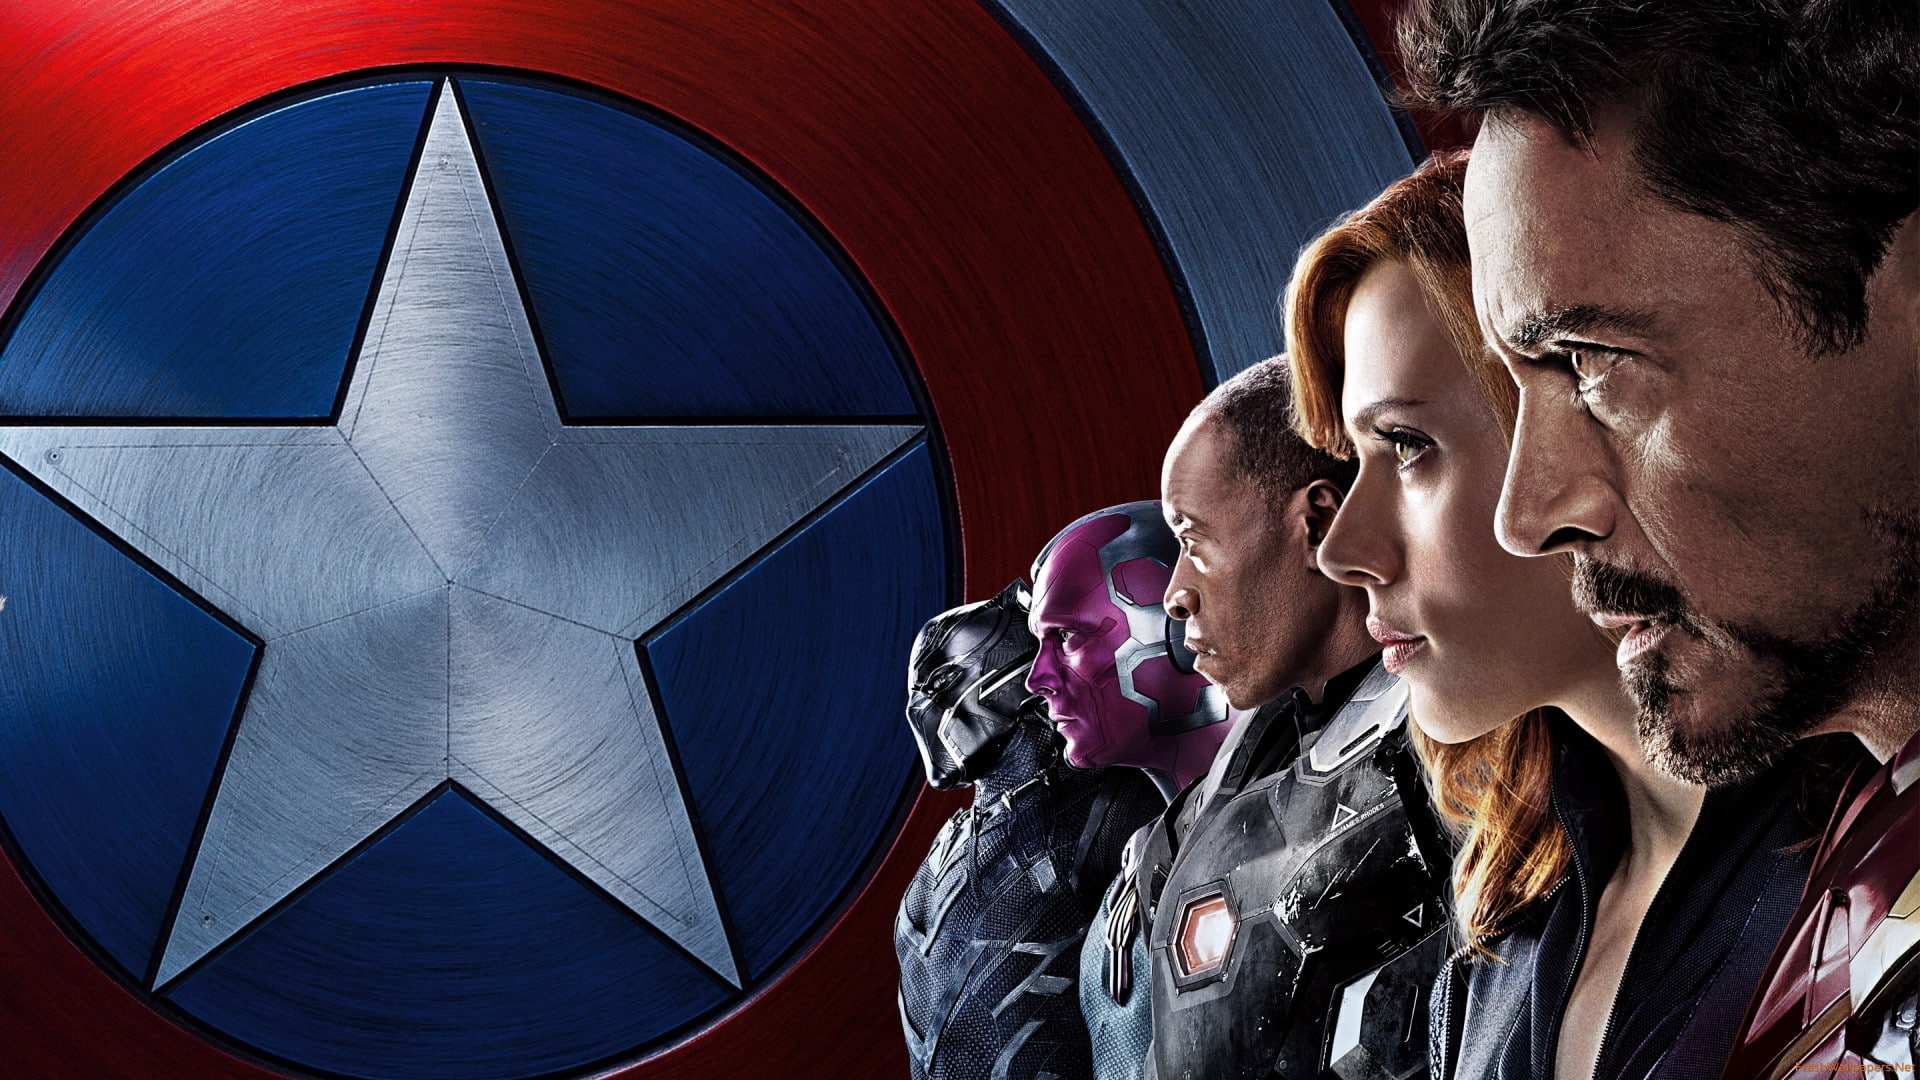 actress, Captain America, Captain America: Civil War, Don Cheadle